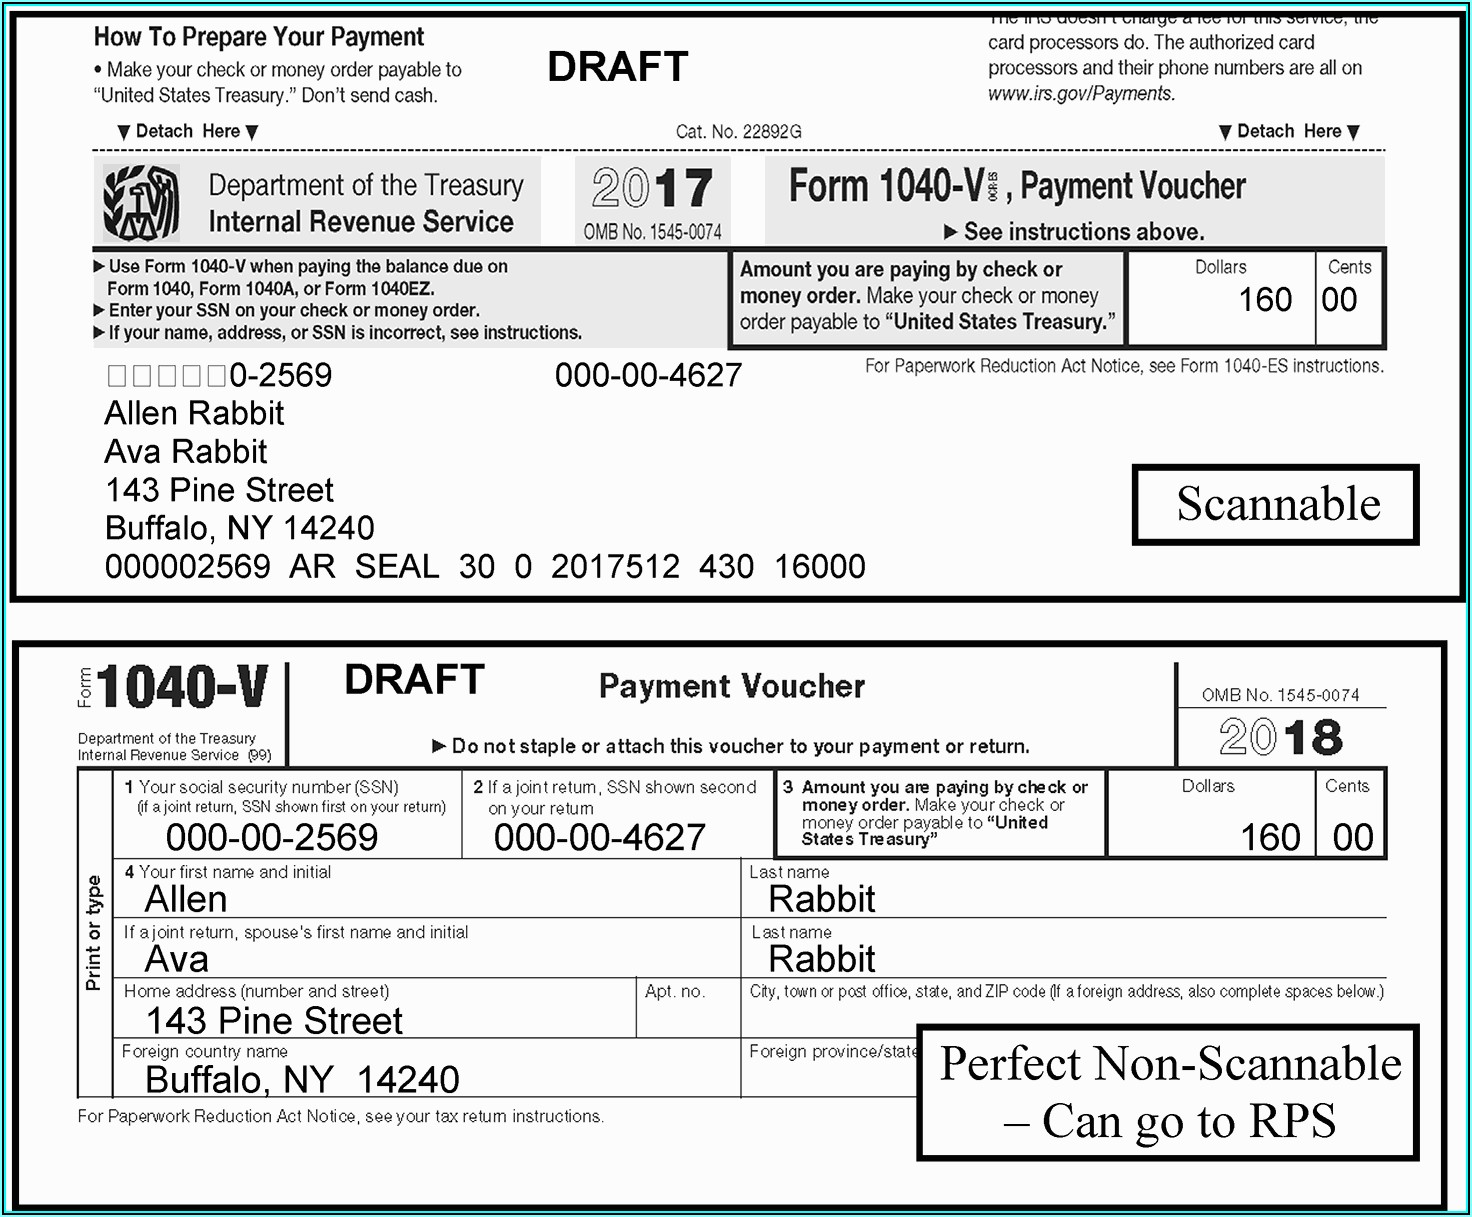 Internal Revenue Service Address For 1099 Forms